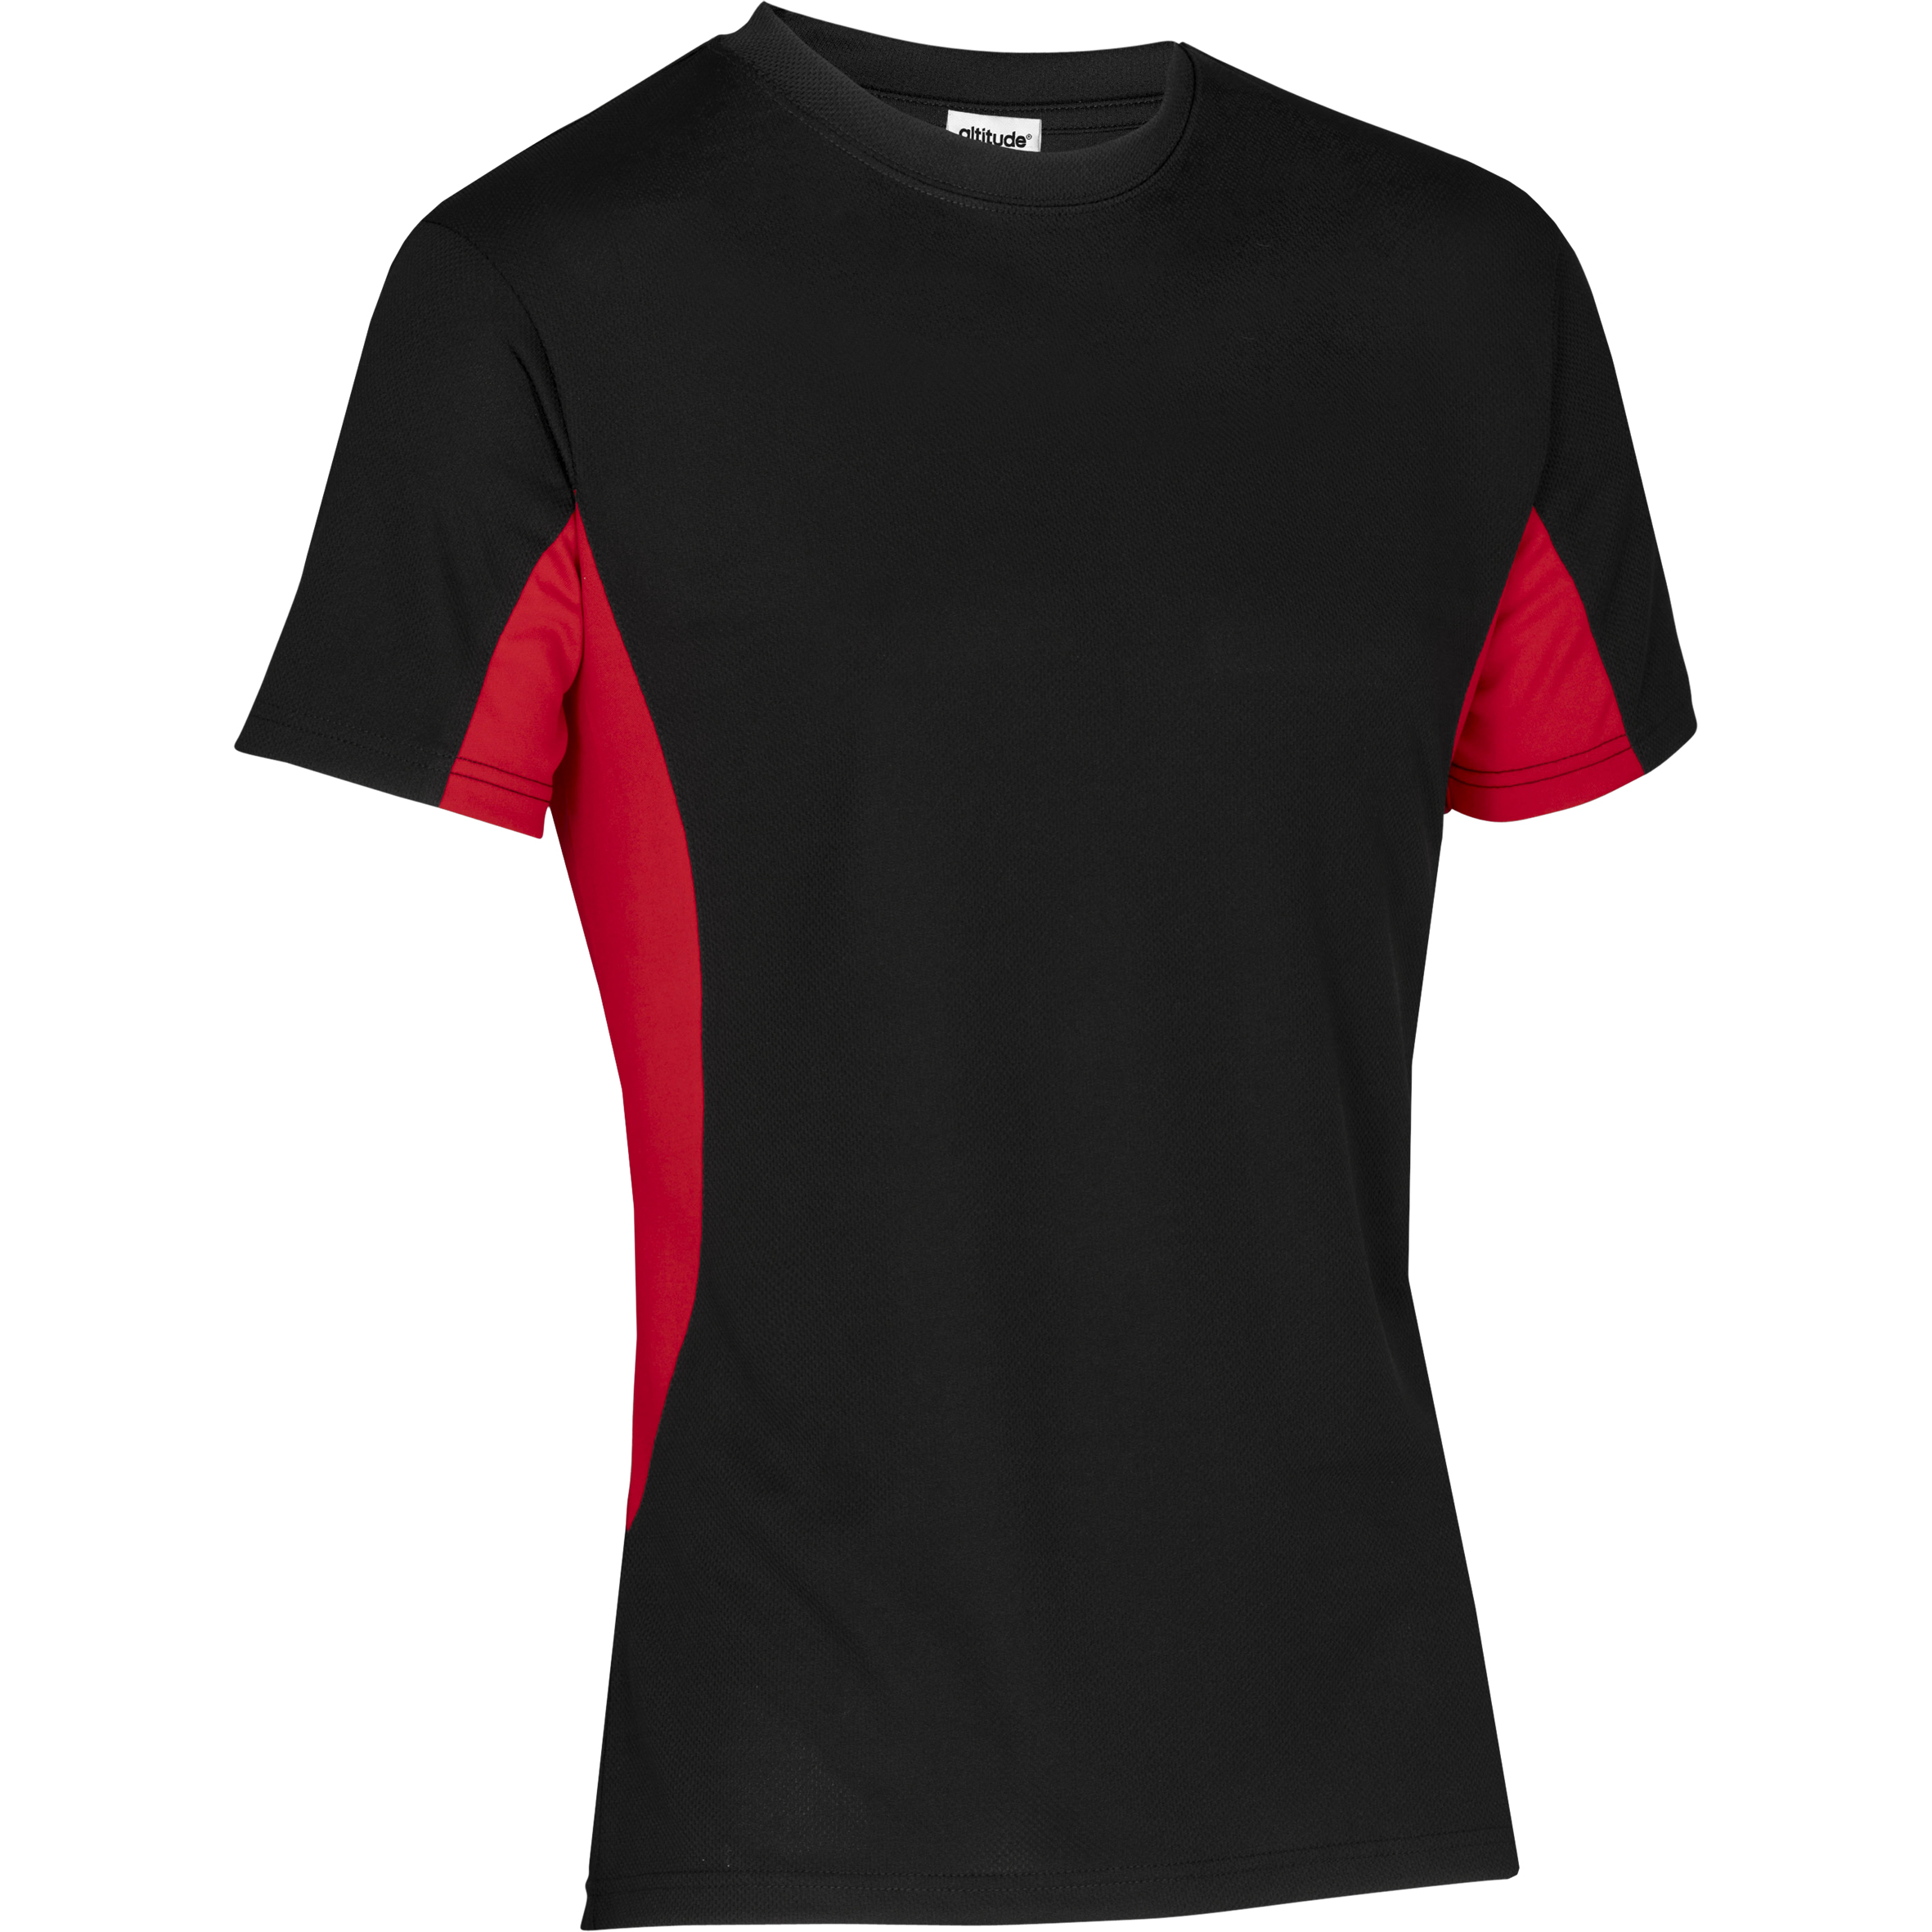 Kids Championship T-Shirt - Black Red